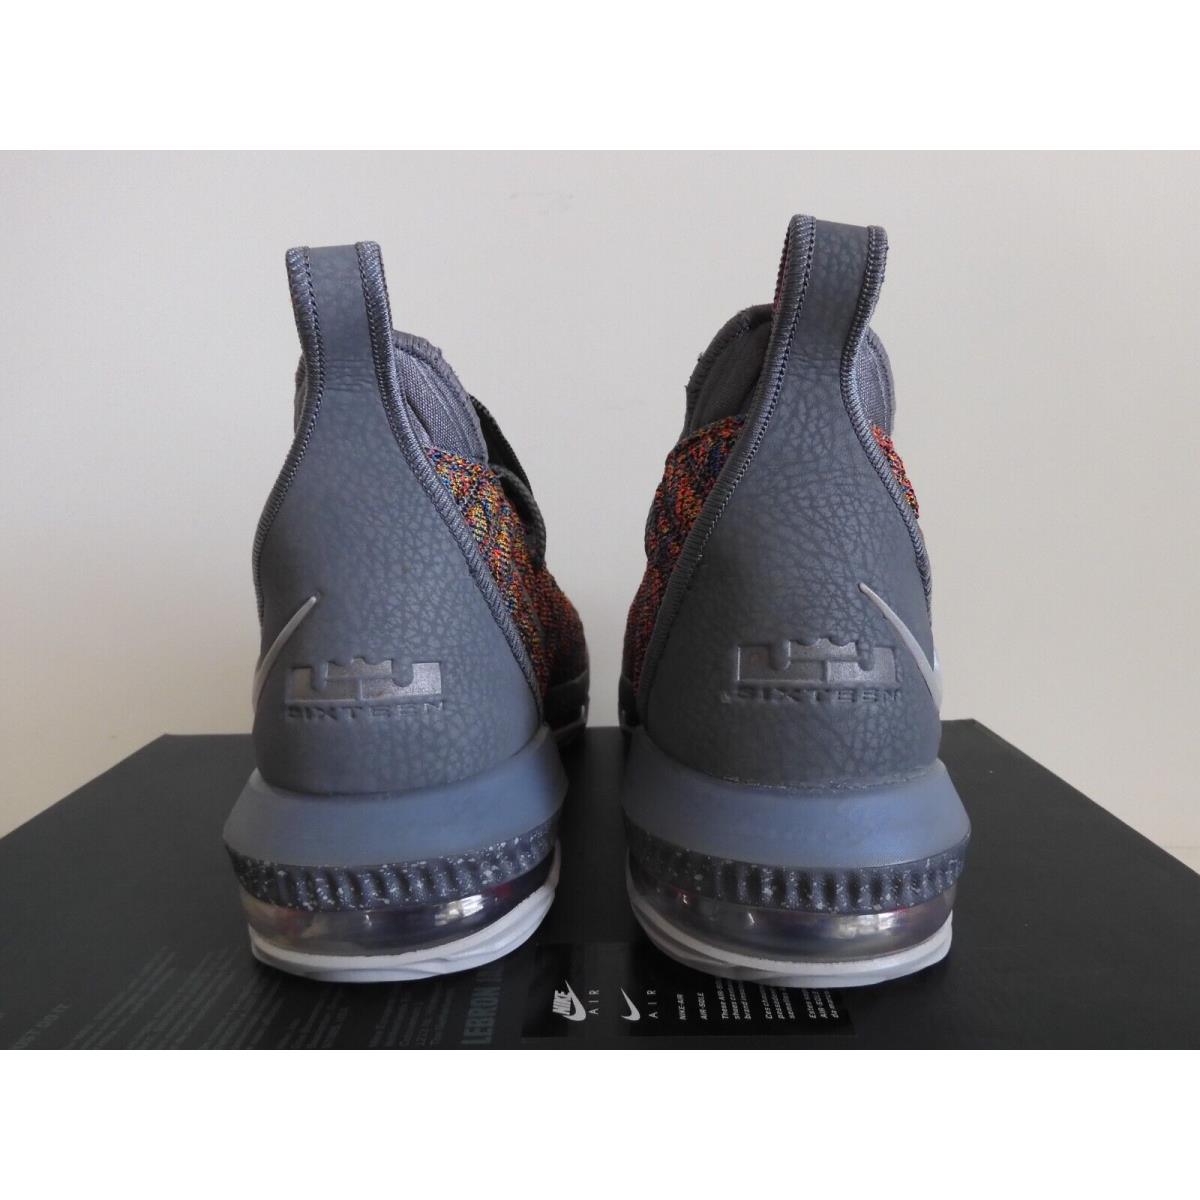 Nike shoes LeBron - Multicolor 2